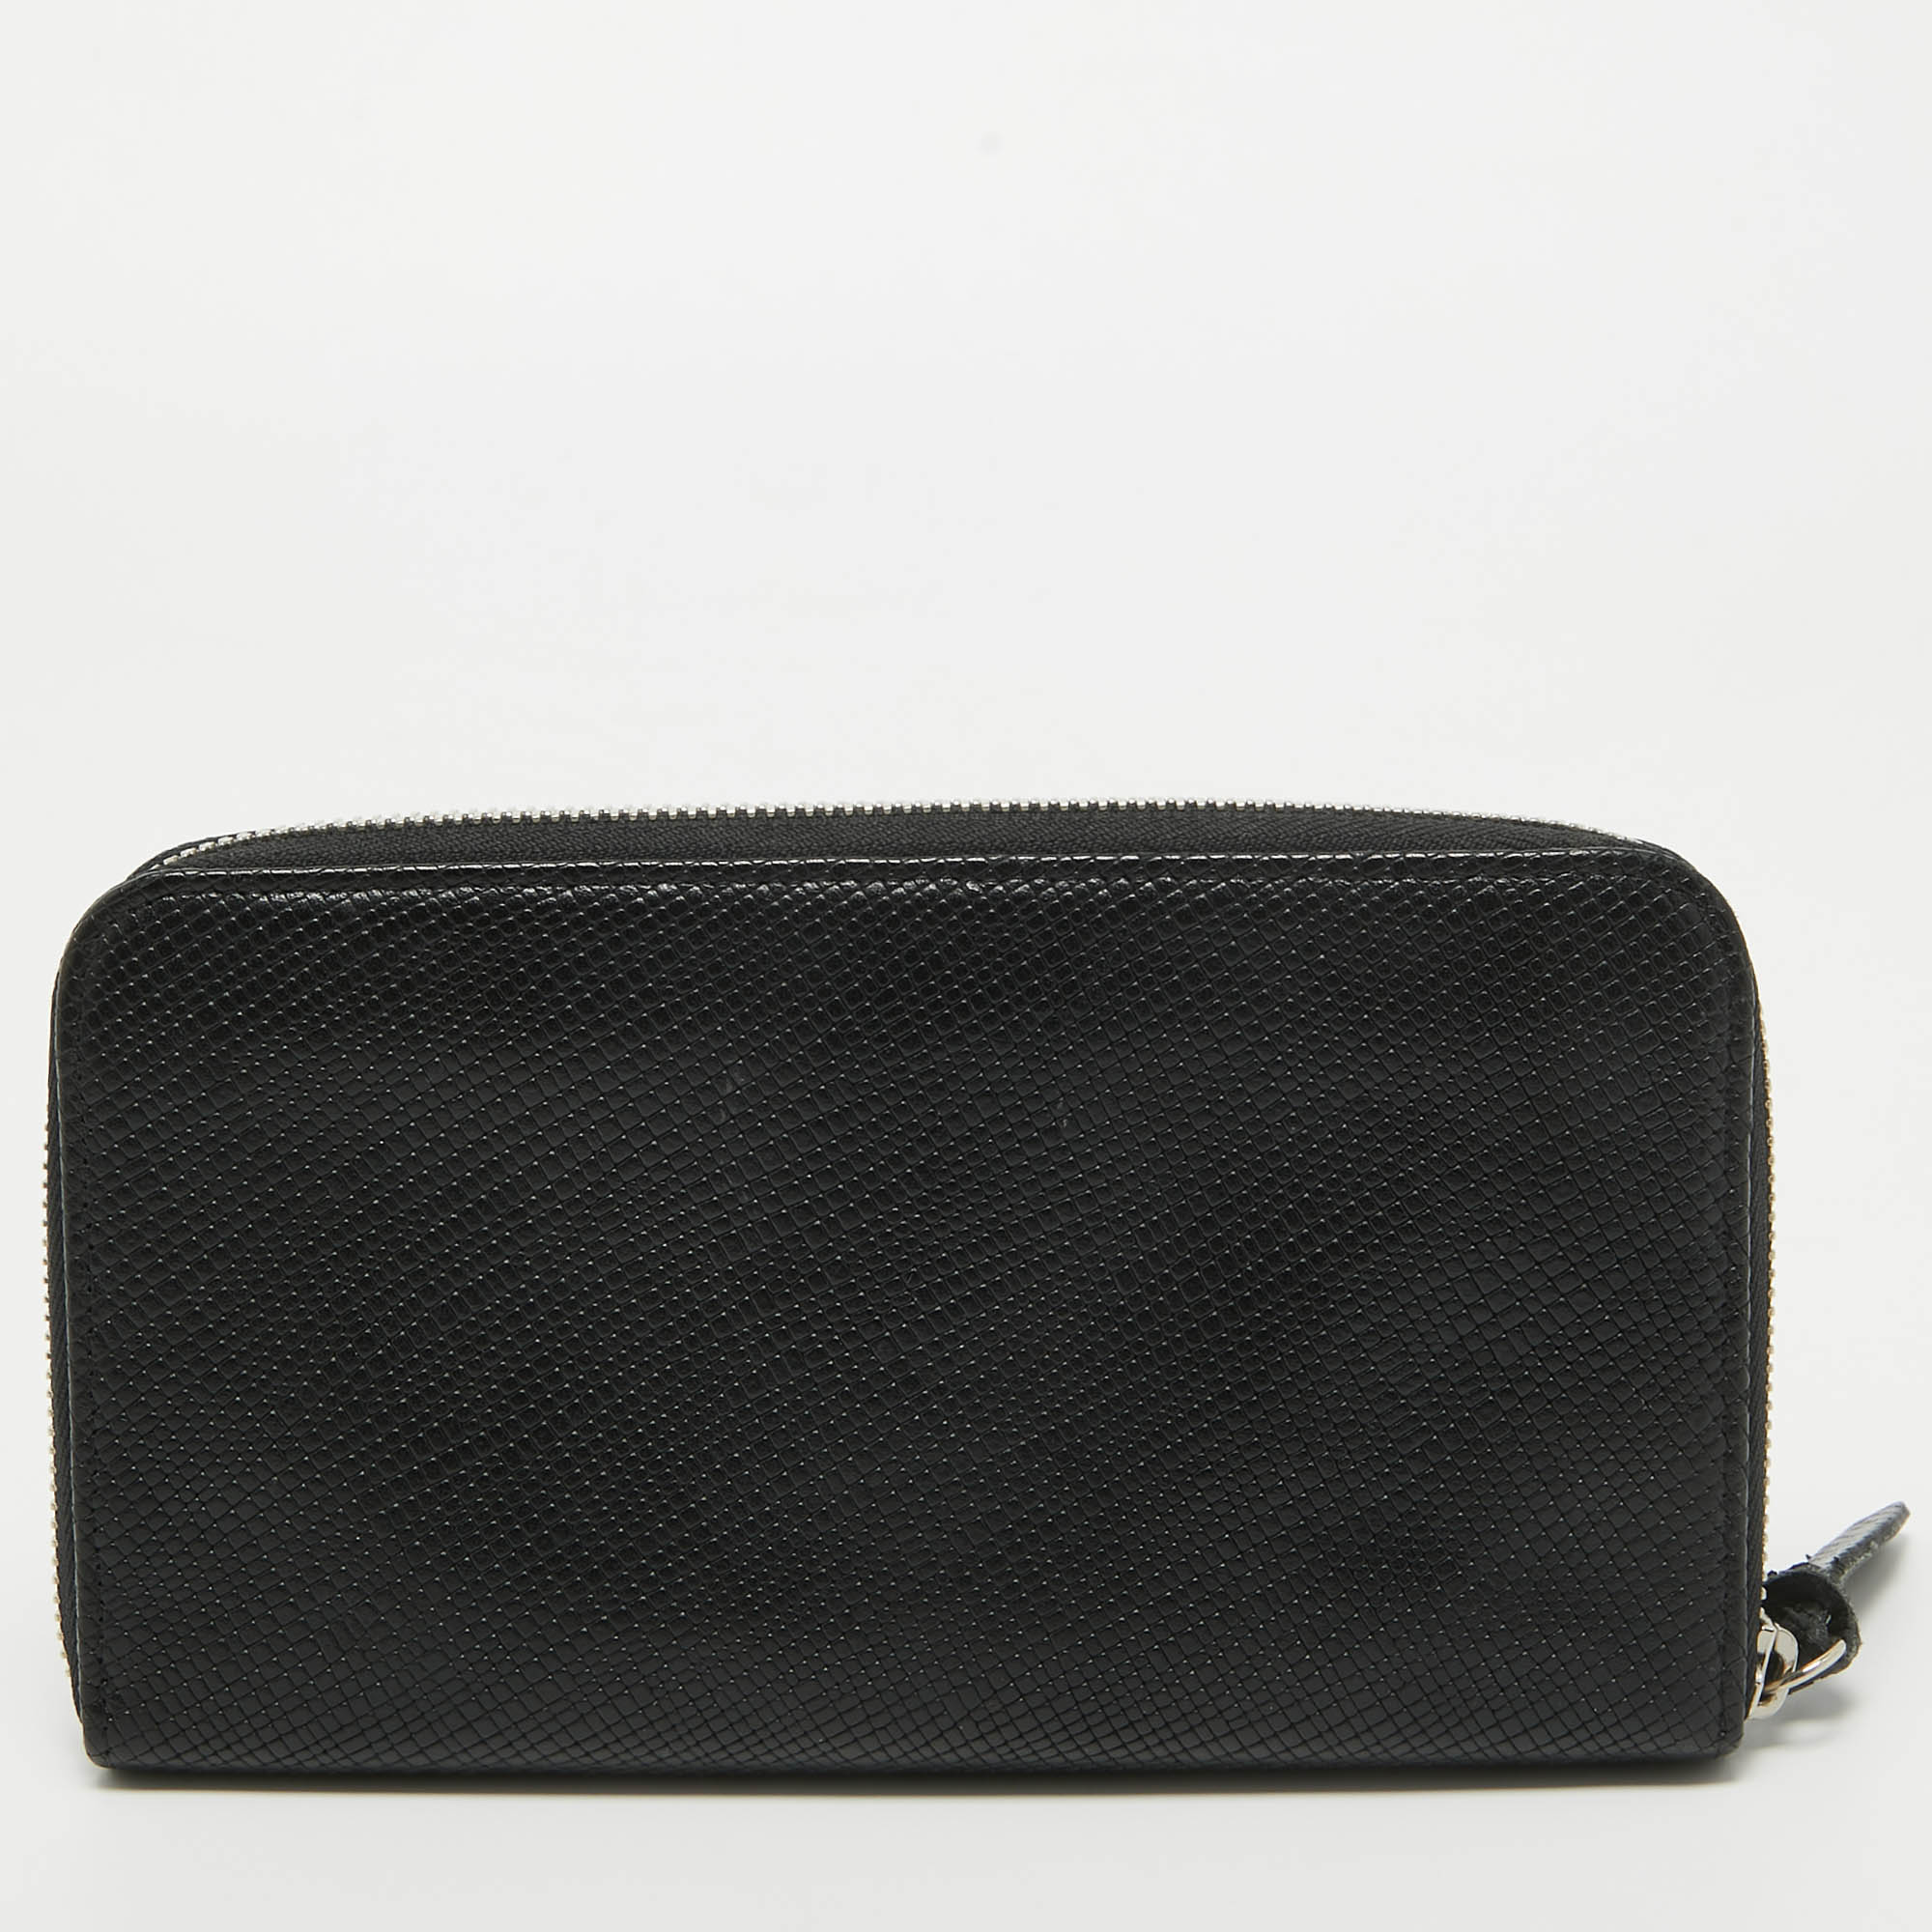 Longchamp Black Textured Leather Zip Around Wallet